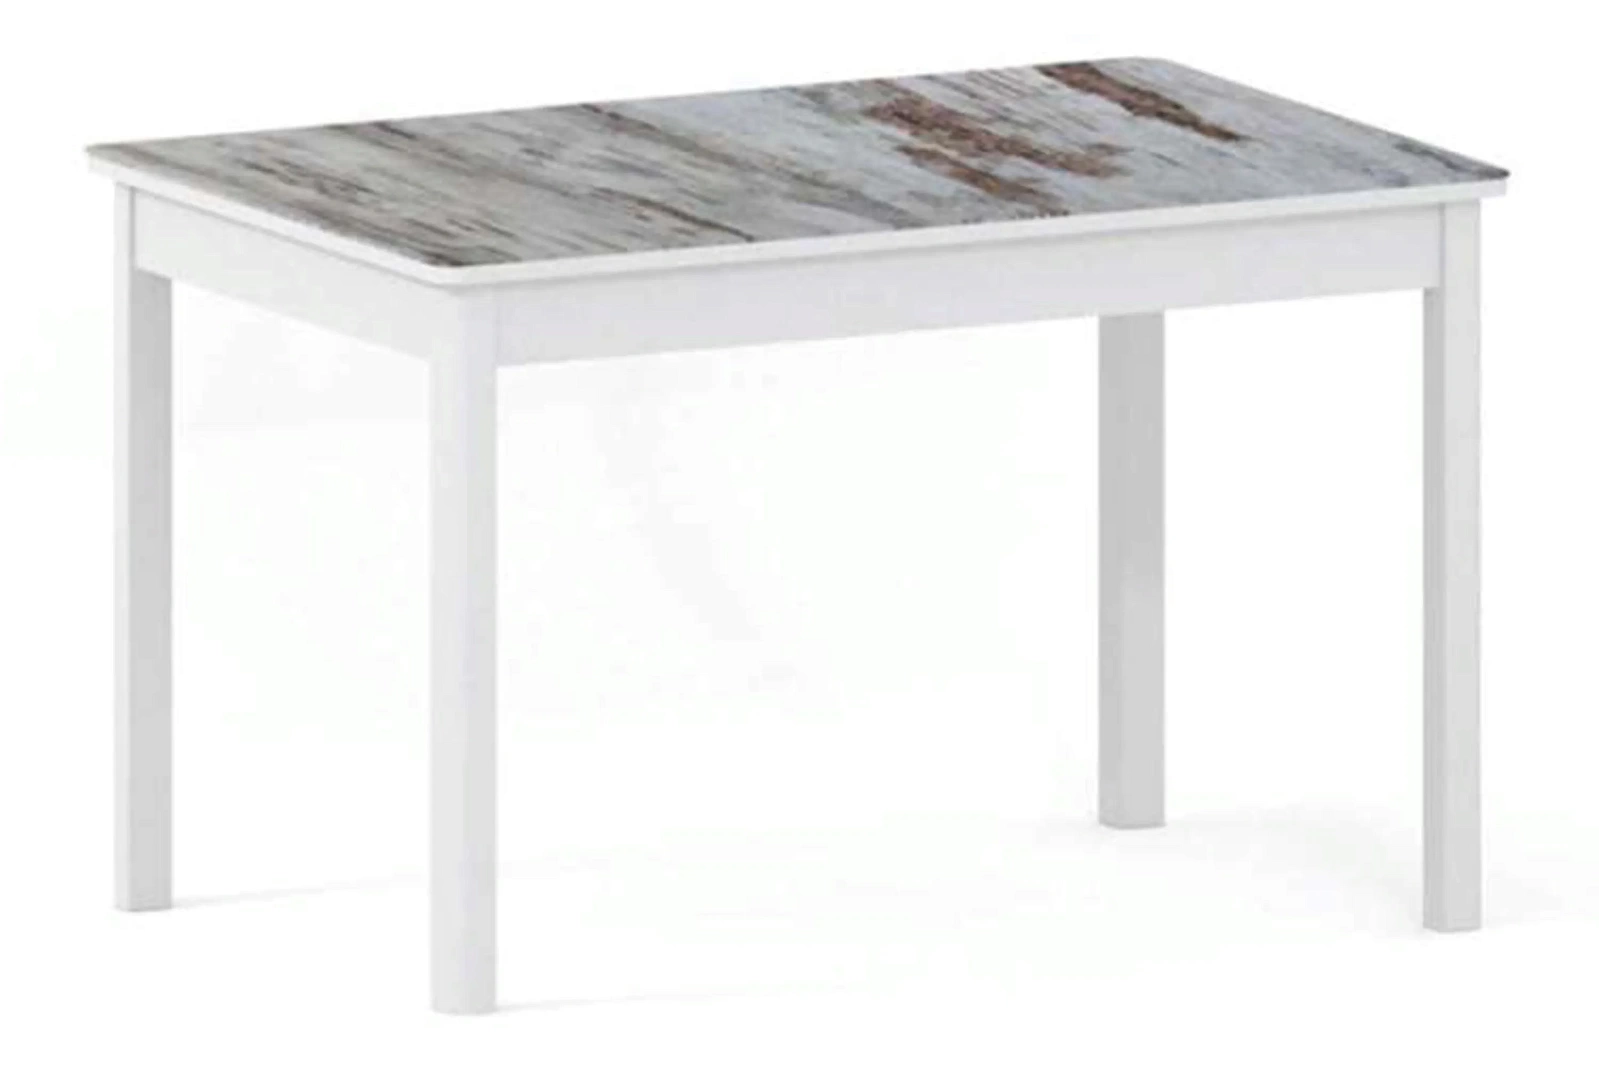 ПРЕСТИЖ-2 стол раскладной 120/152 см (пластик)